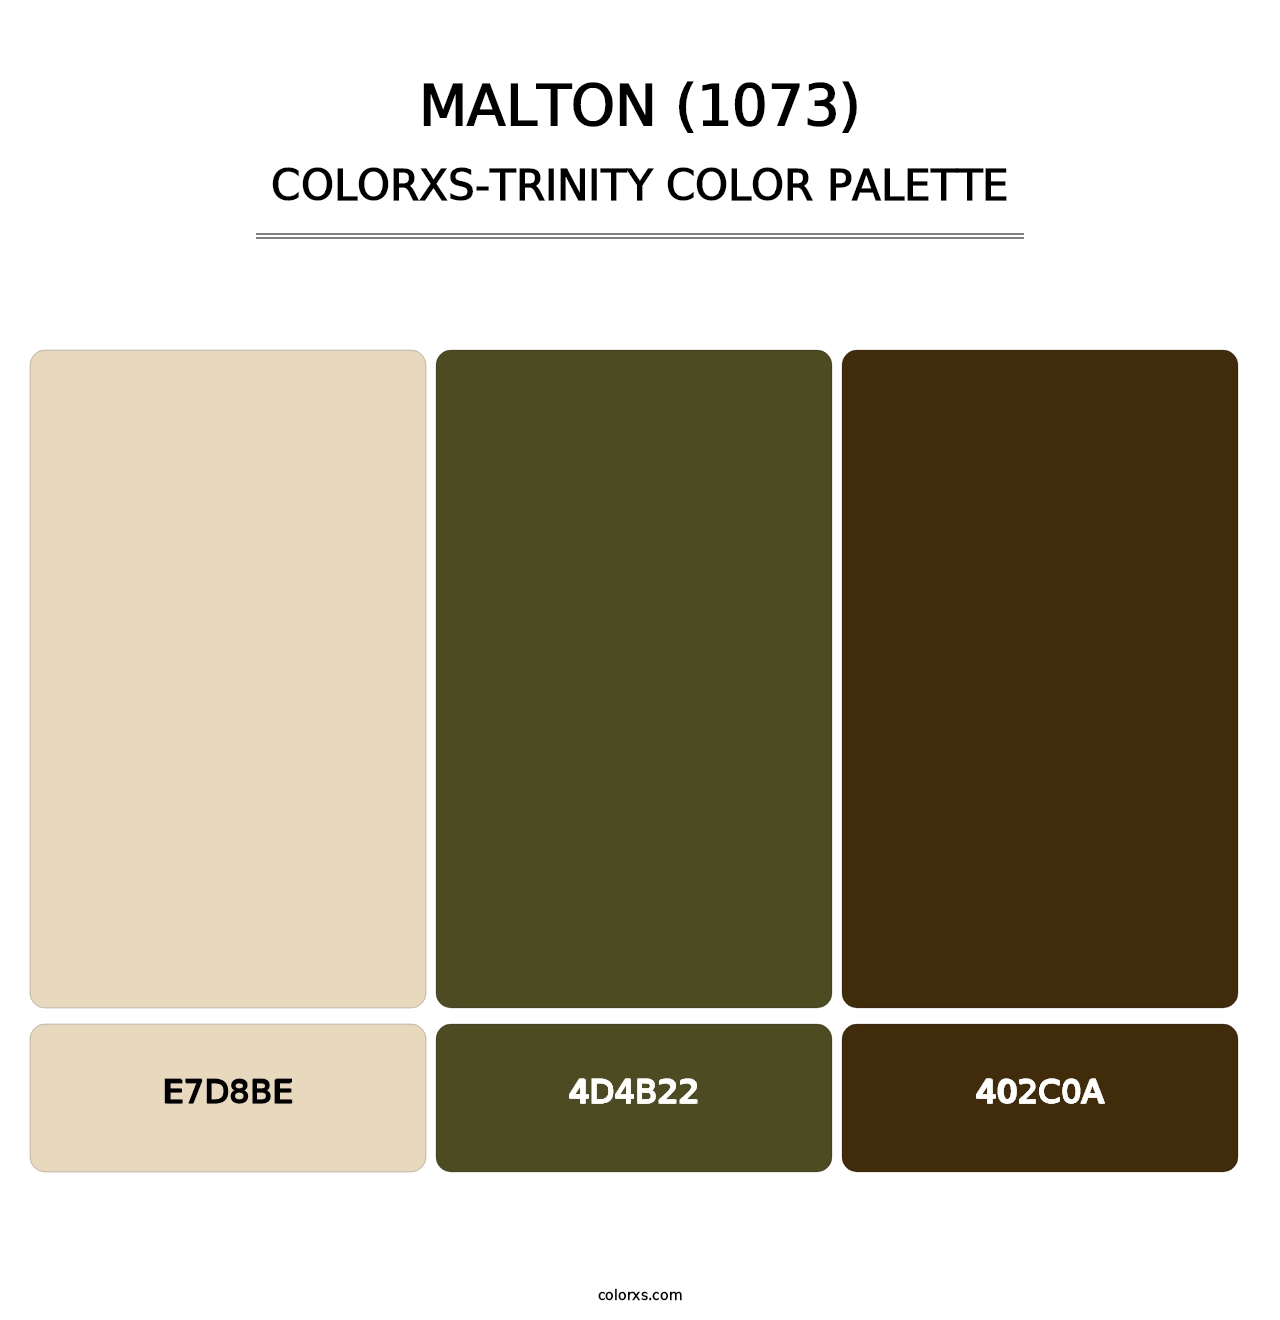 Malton (1073) - Colorxs Trinity Palette